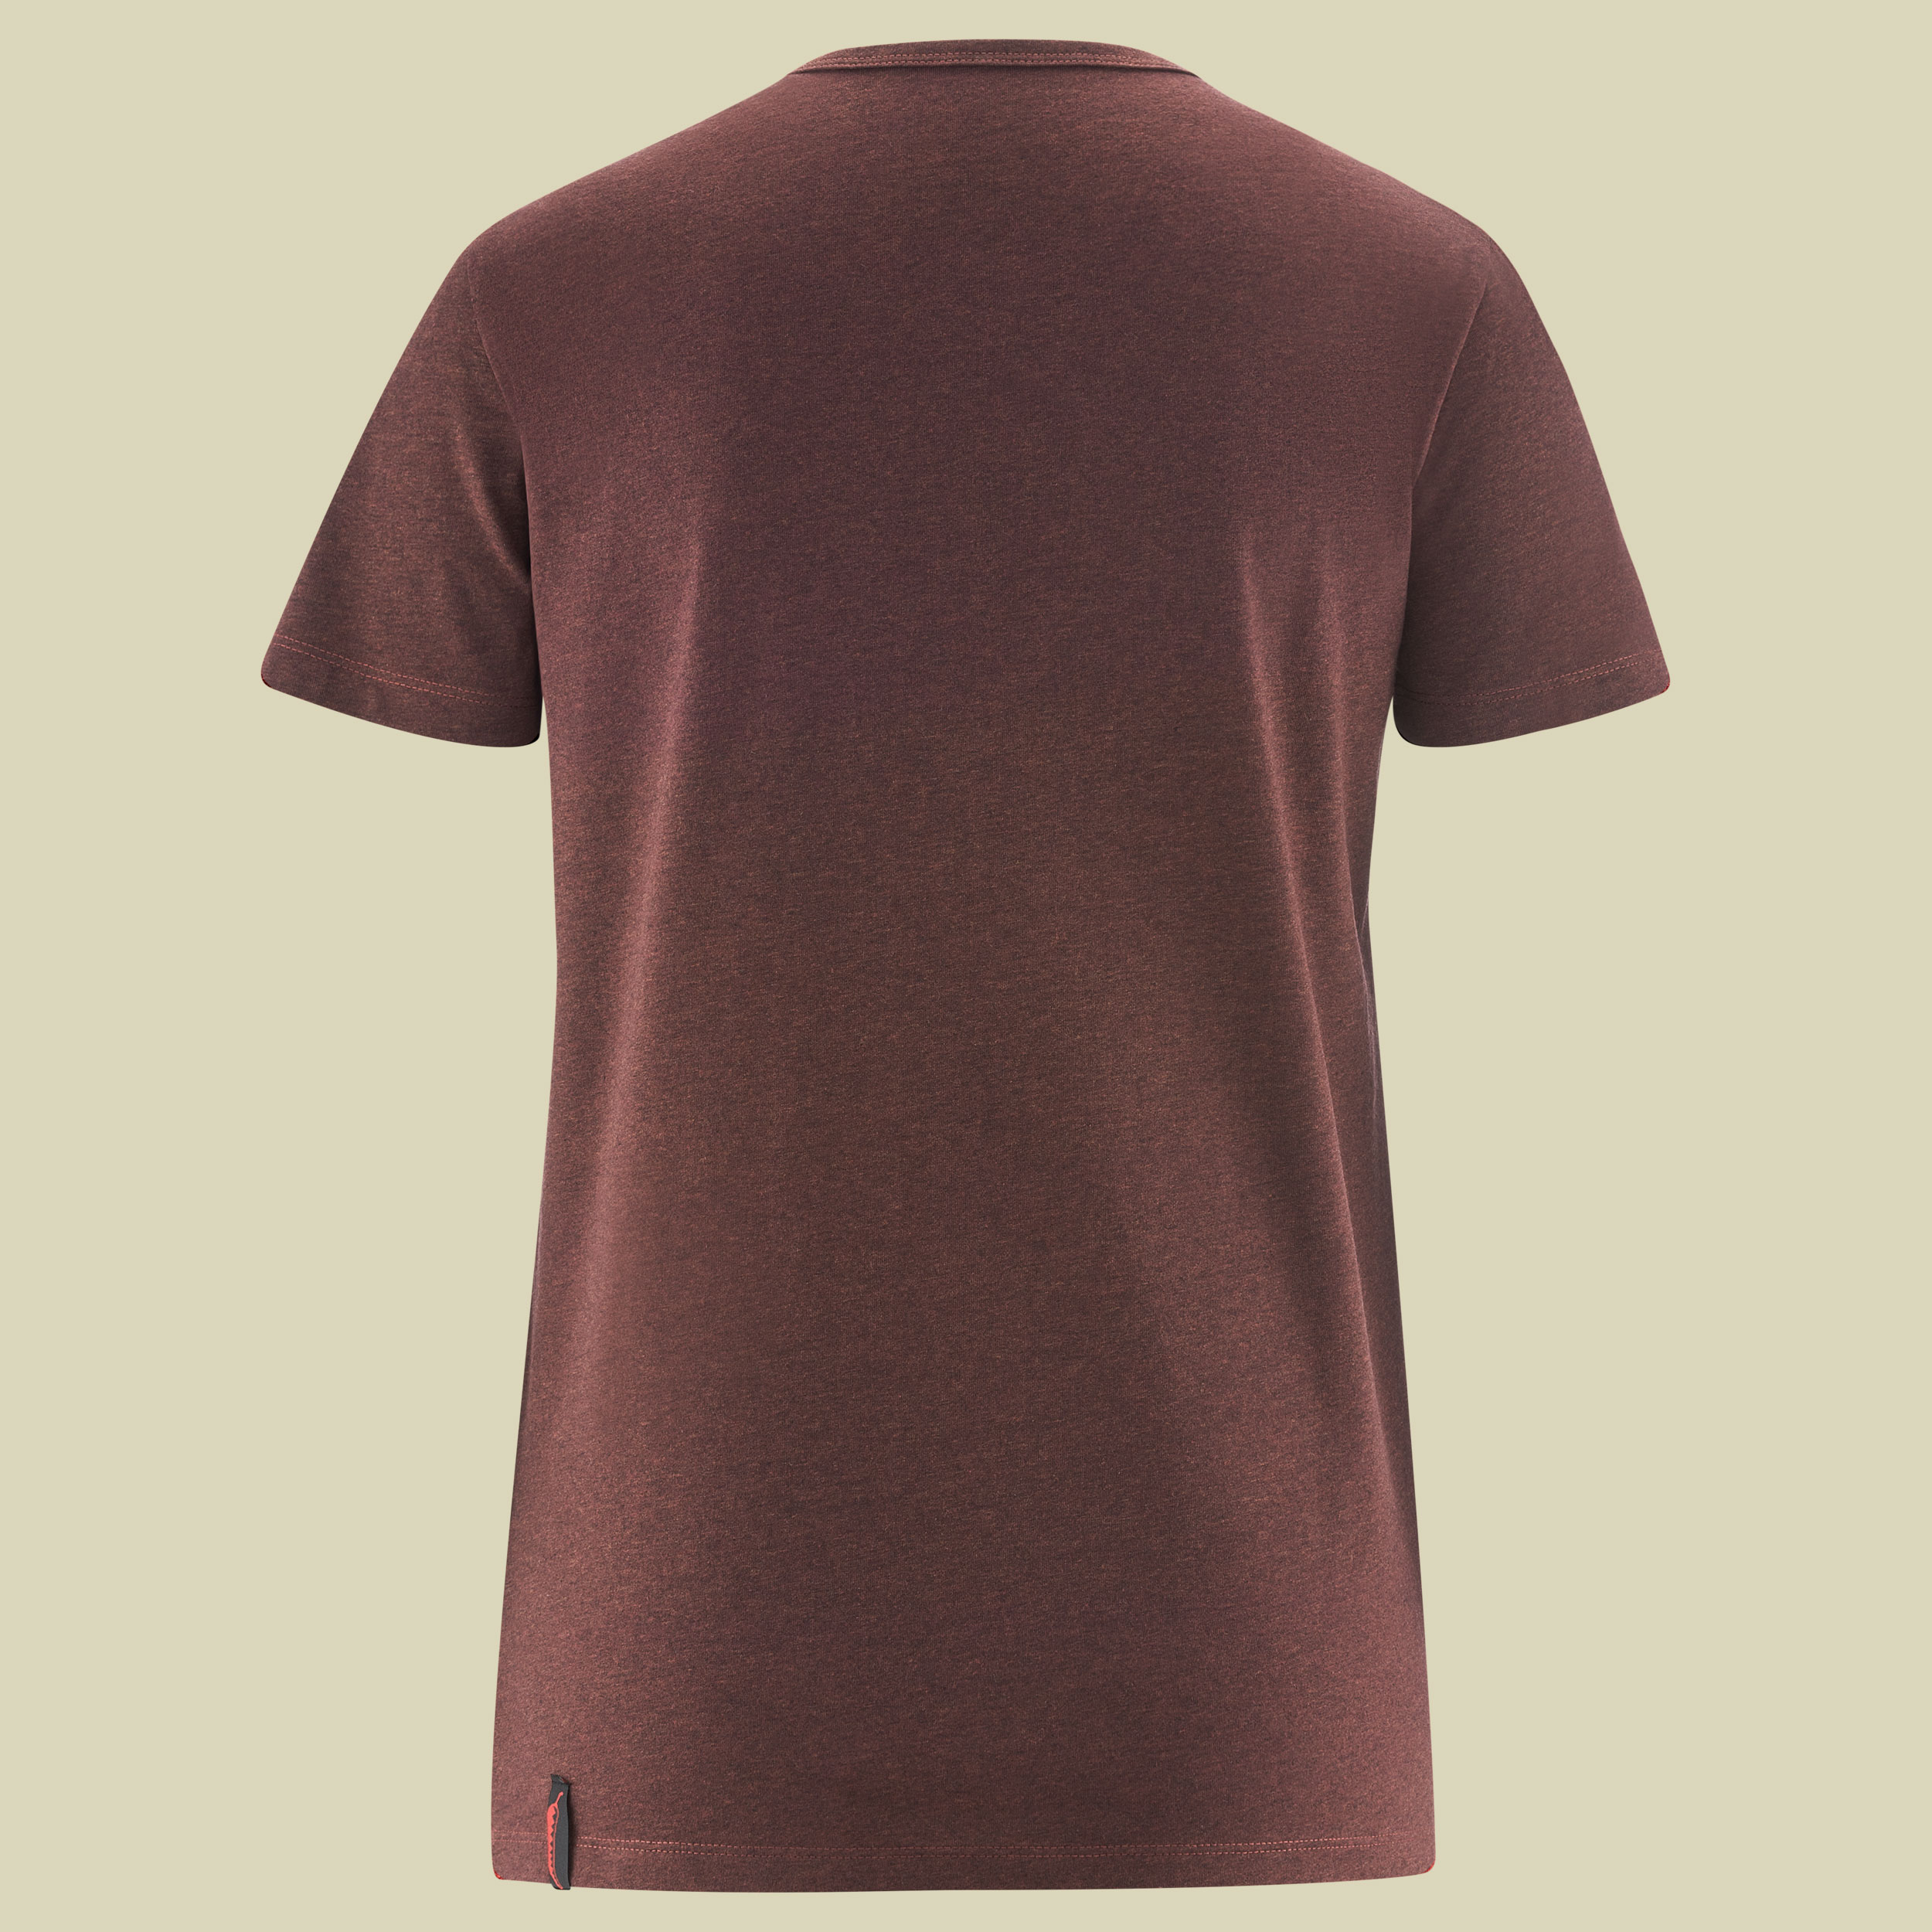 Lakit T-Shirt Women Größe S Farbe beetroot